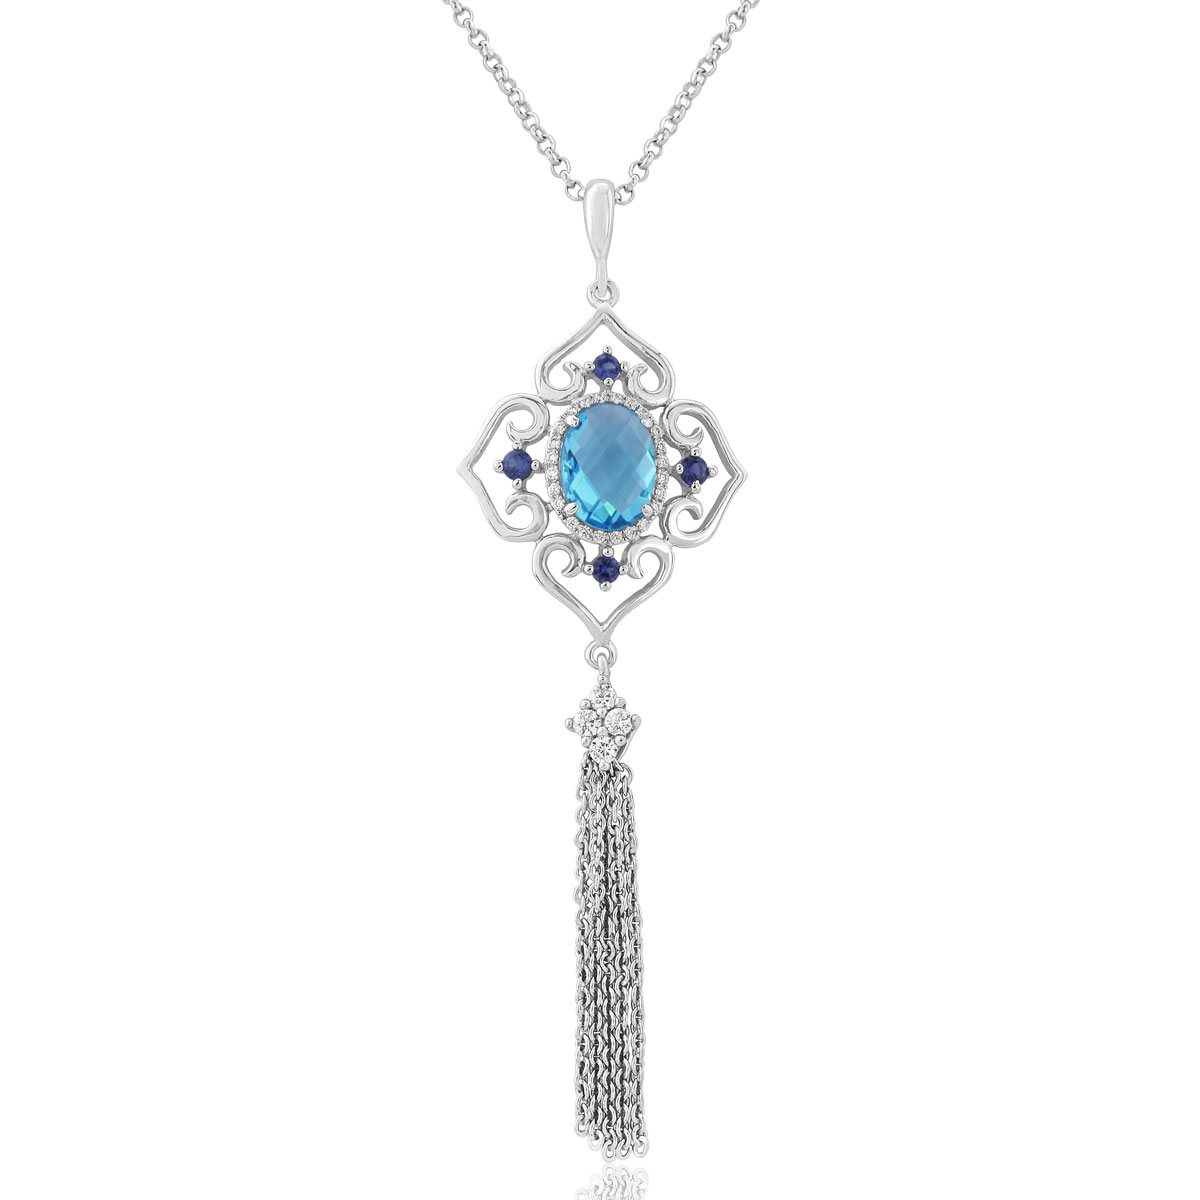 Waterford Jewelry Sterling Silver Pendant Ornate Multi Blue Topaz Tassle